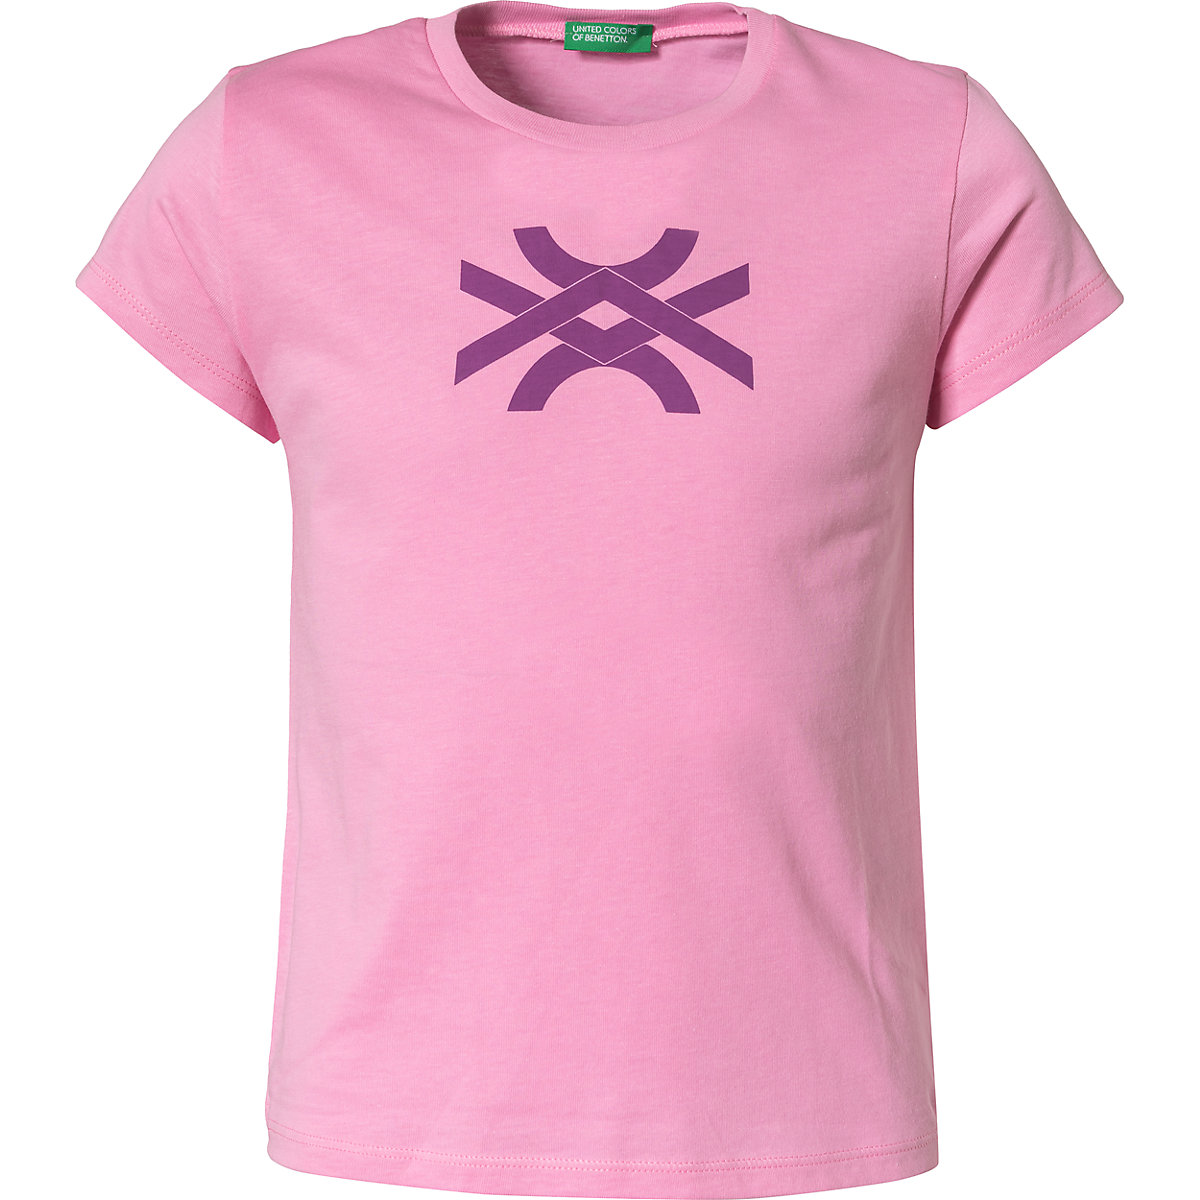 United Colors of Benetton T-Shirt für Mädchen pink